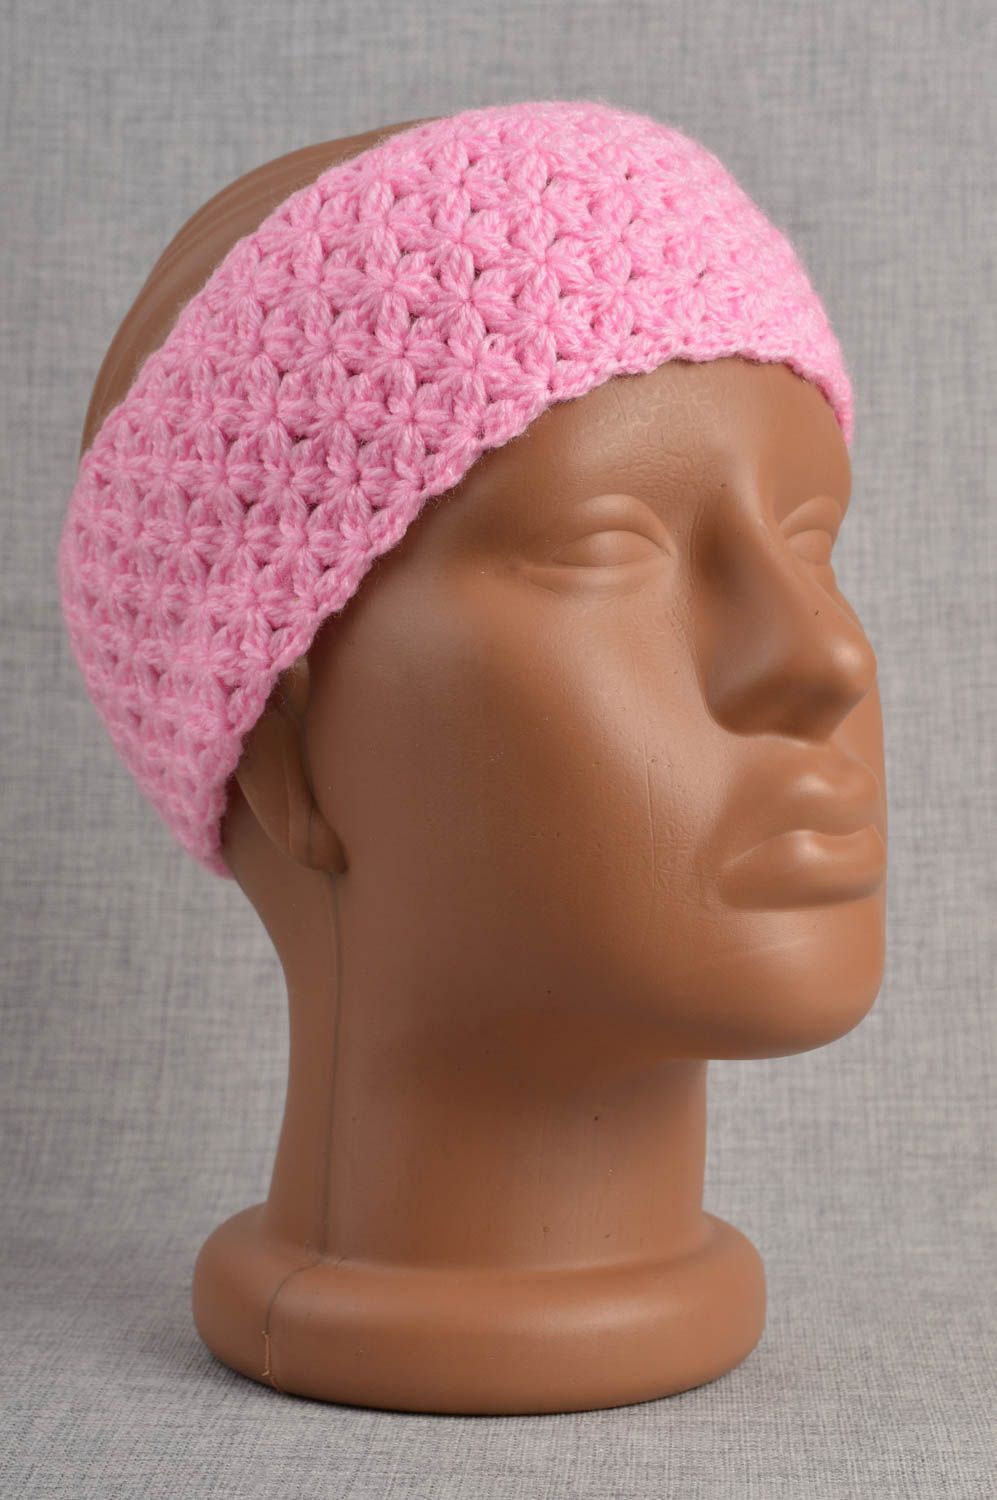 Wide handmade headband stretchy crochet headband kids fashion gift ideas photo 1